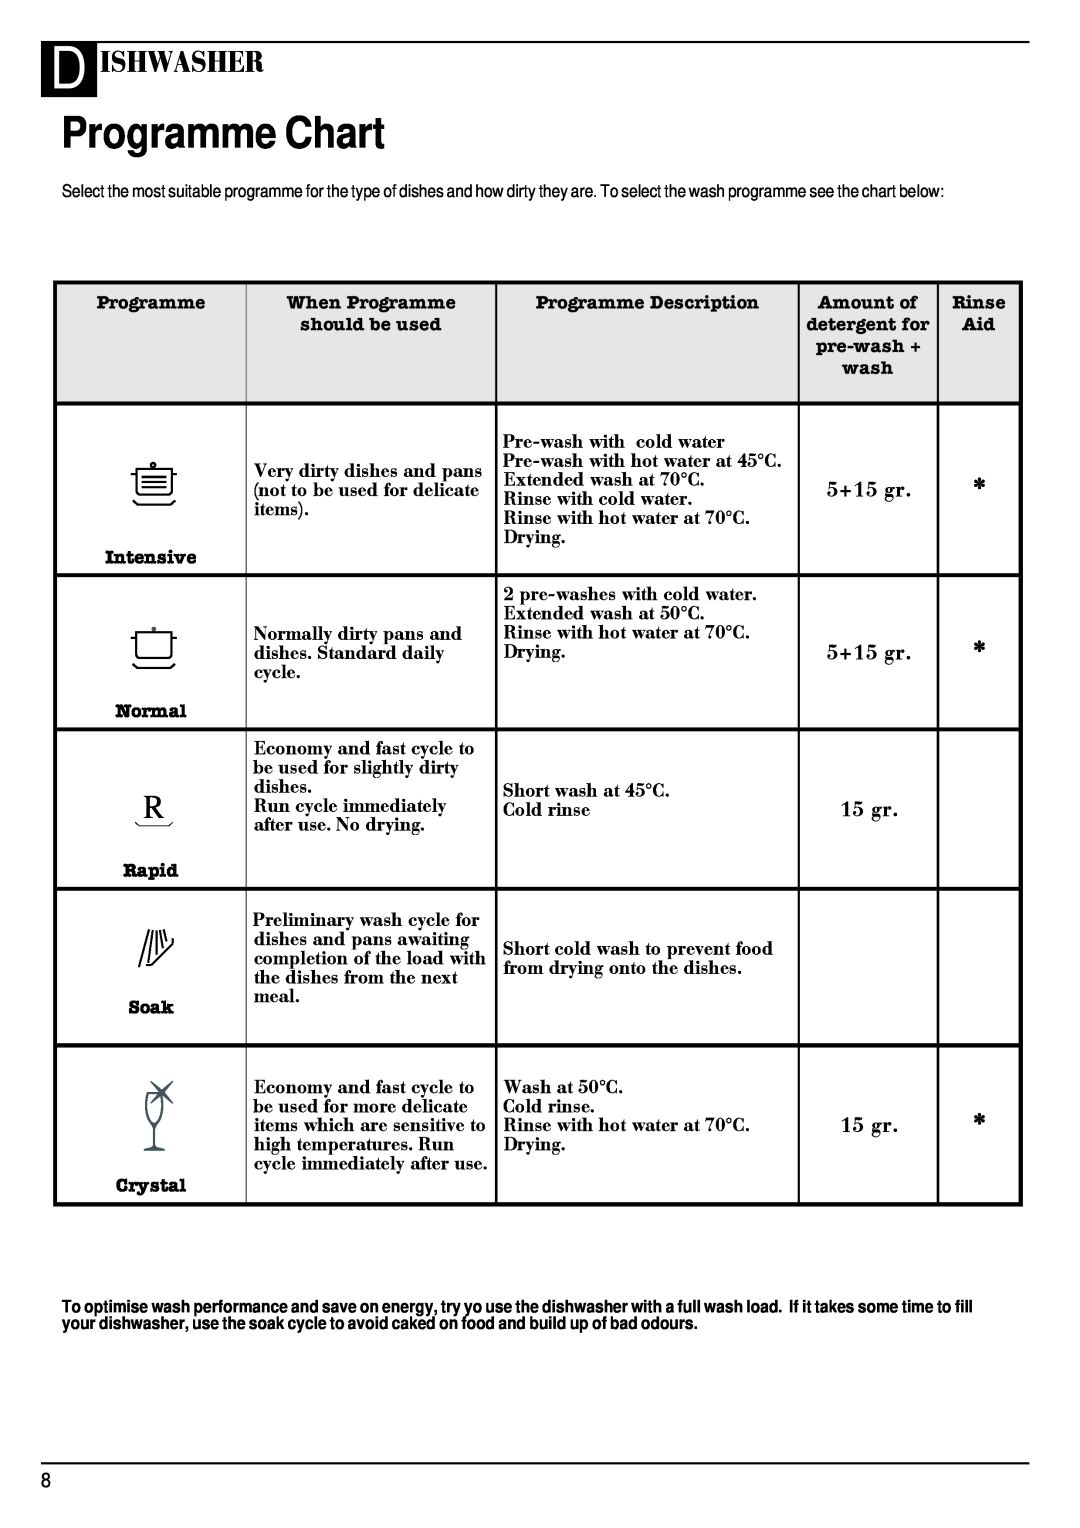 Hotpoint BCI45 manual Programme Chart, D Ishwasher 